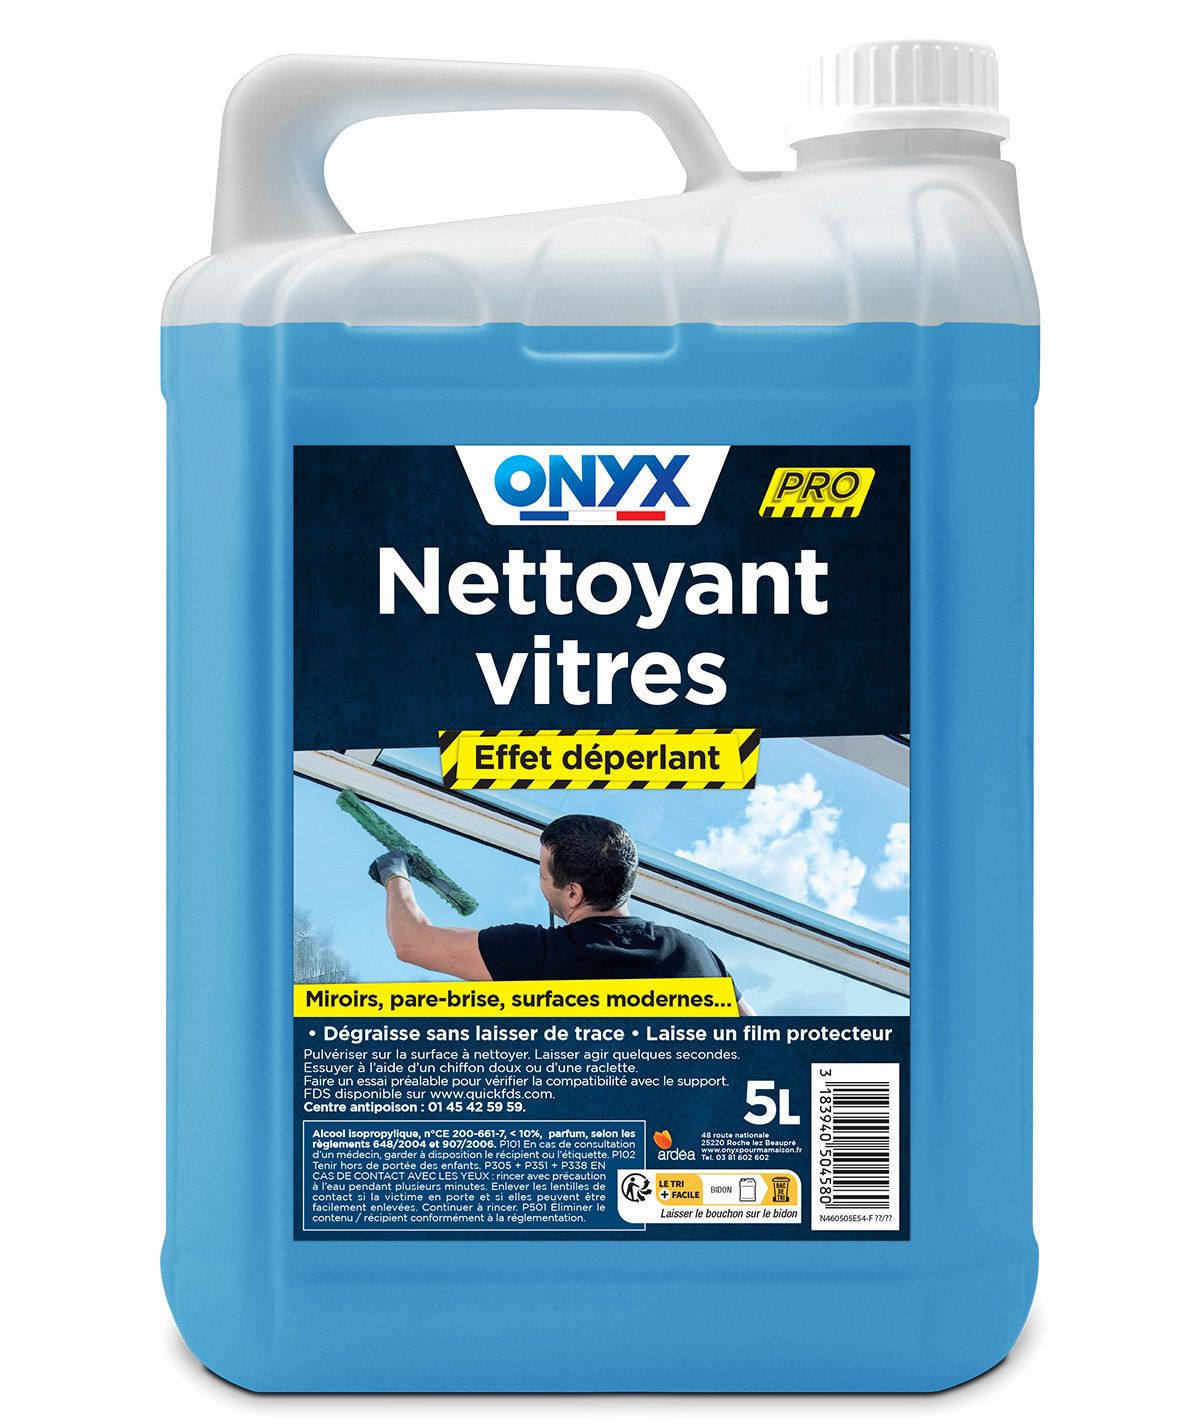 Nettoyant Vitres Onyx Professionnel - 5L